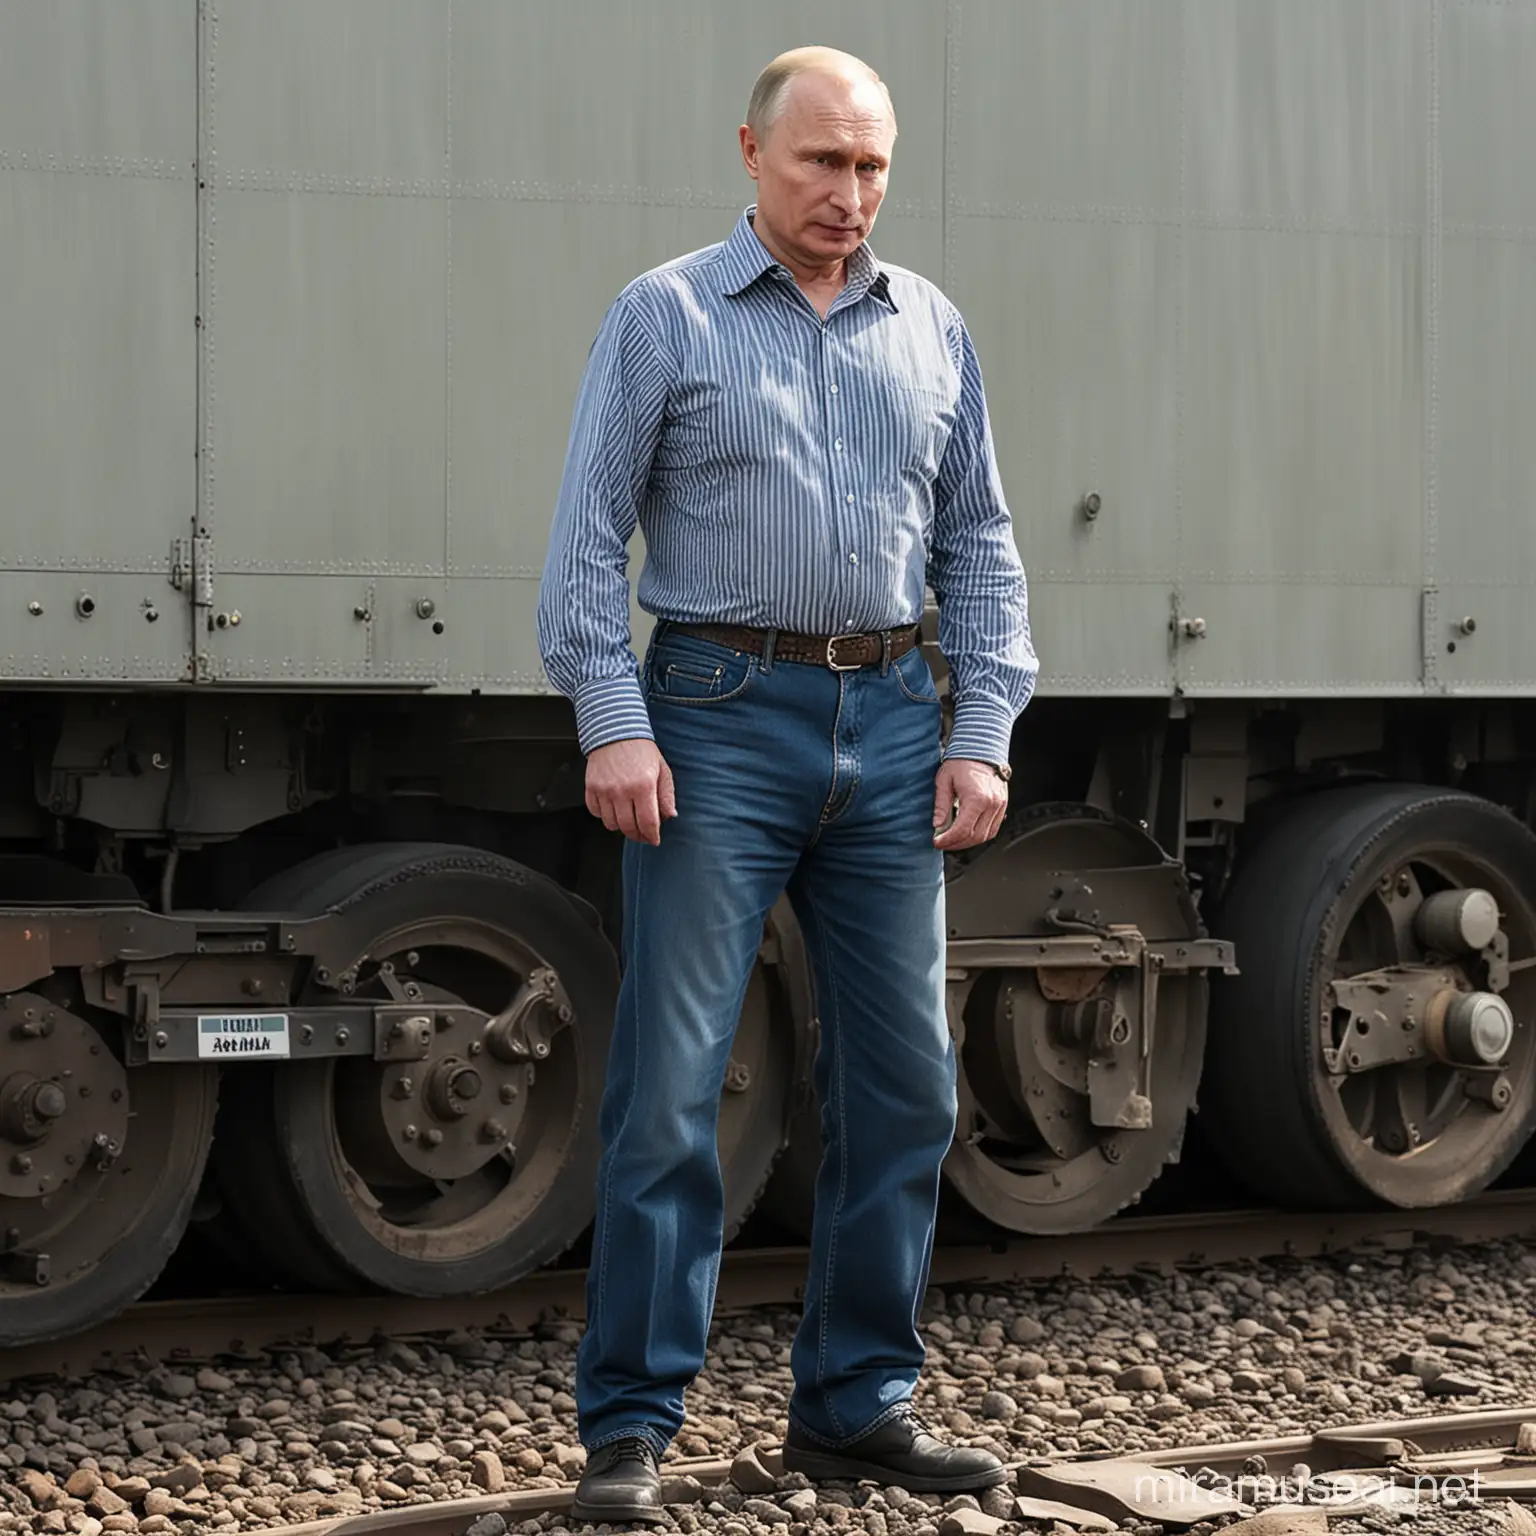 Putin Receives Vodka Airdrop atop Armored Train